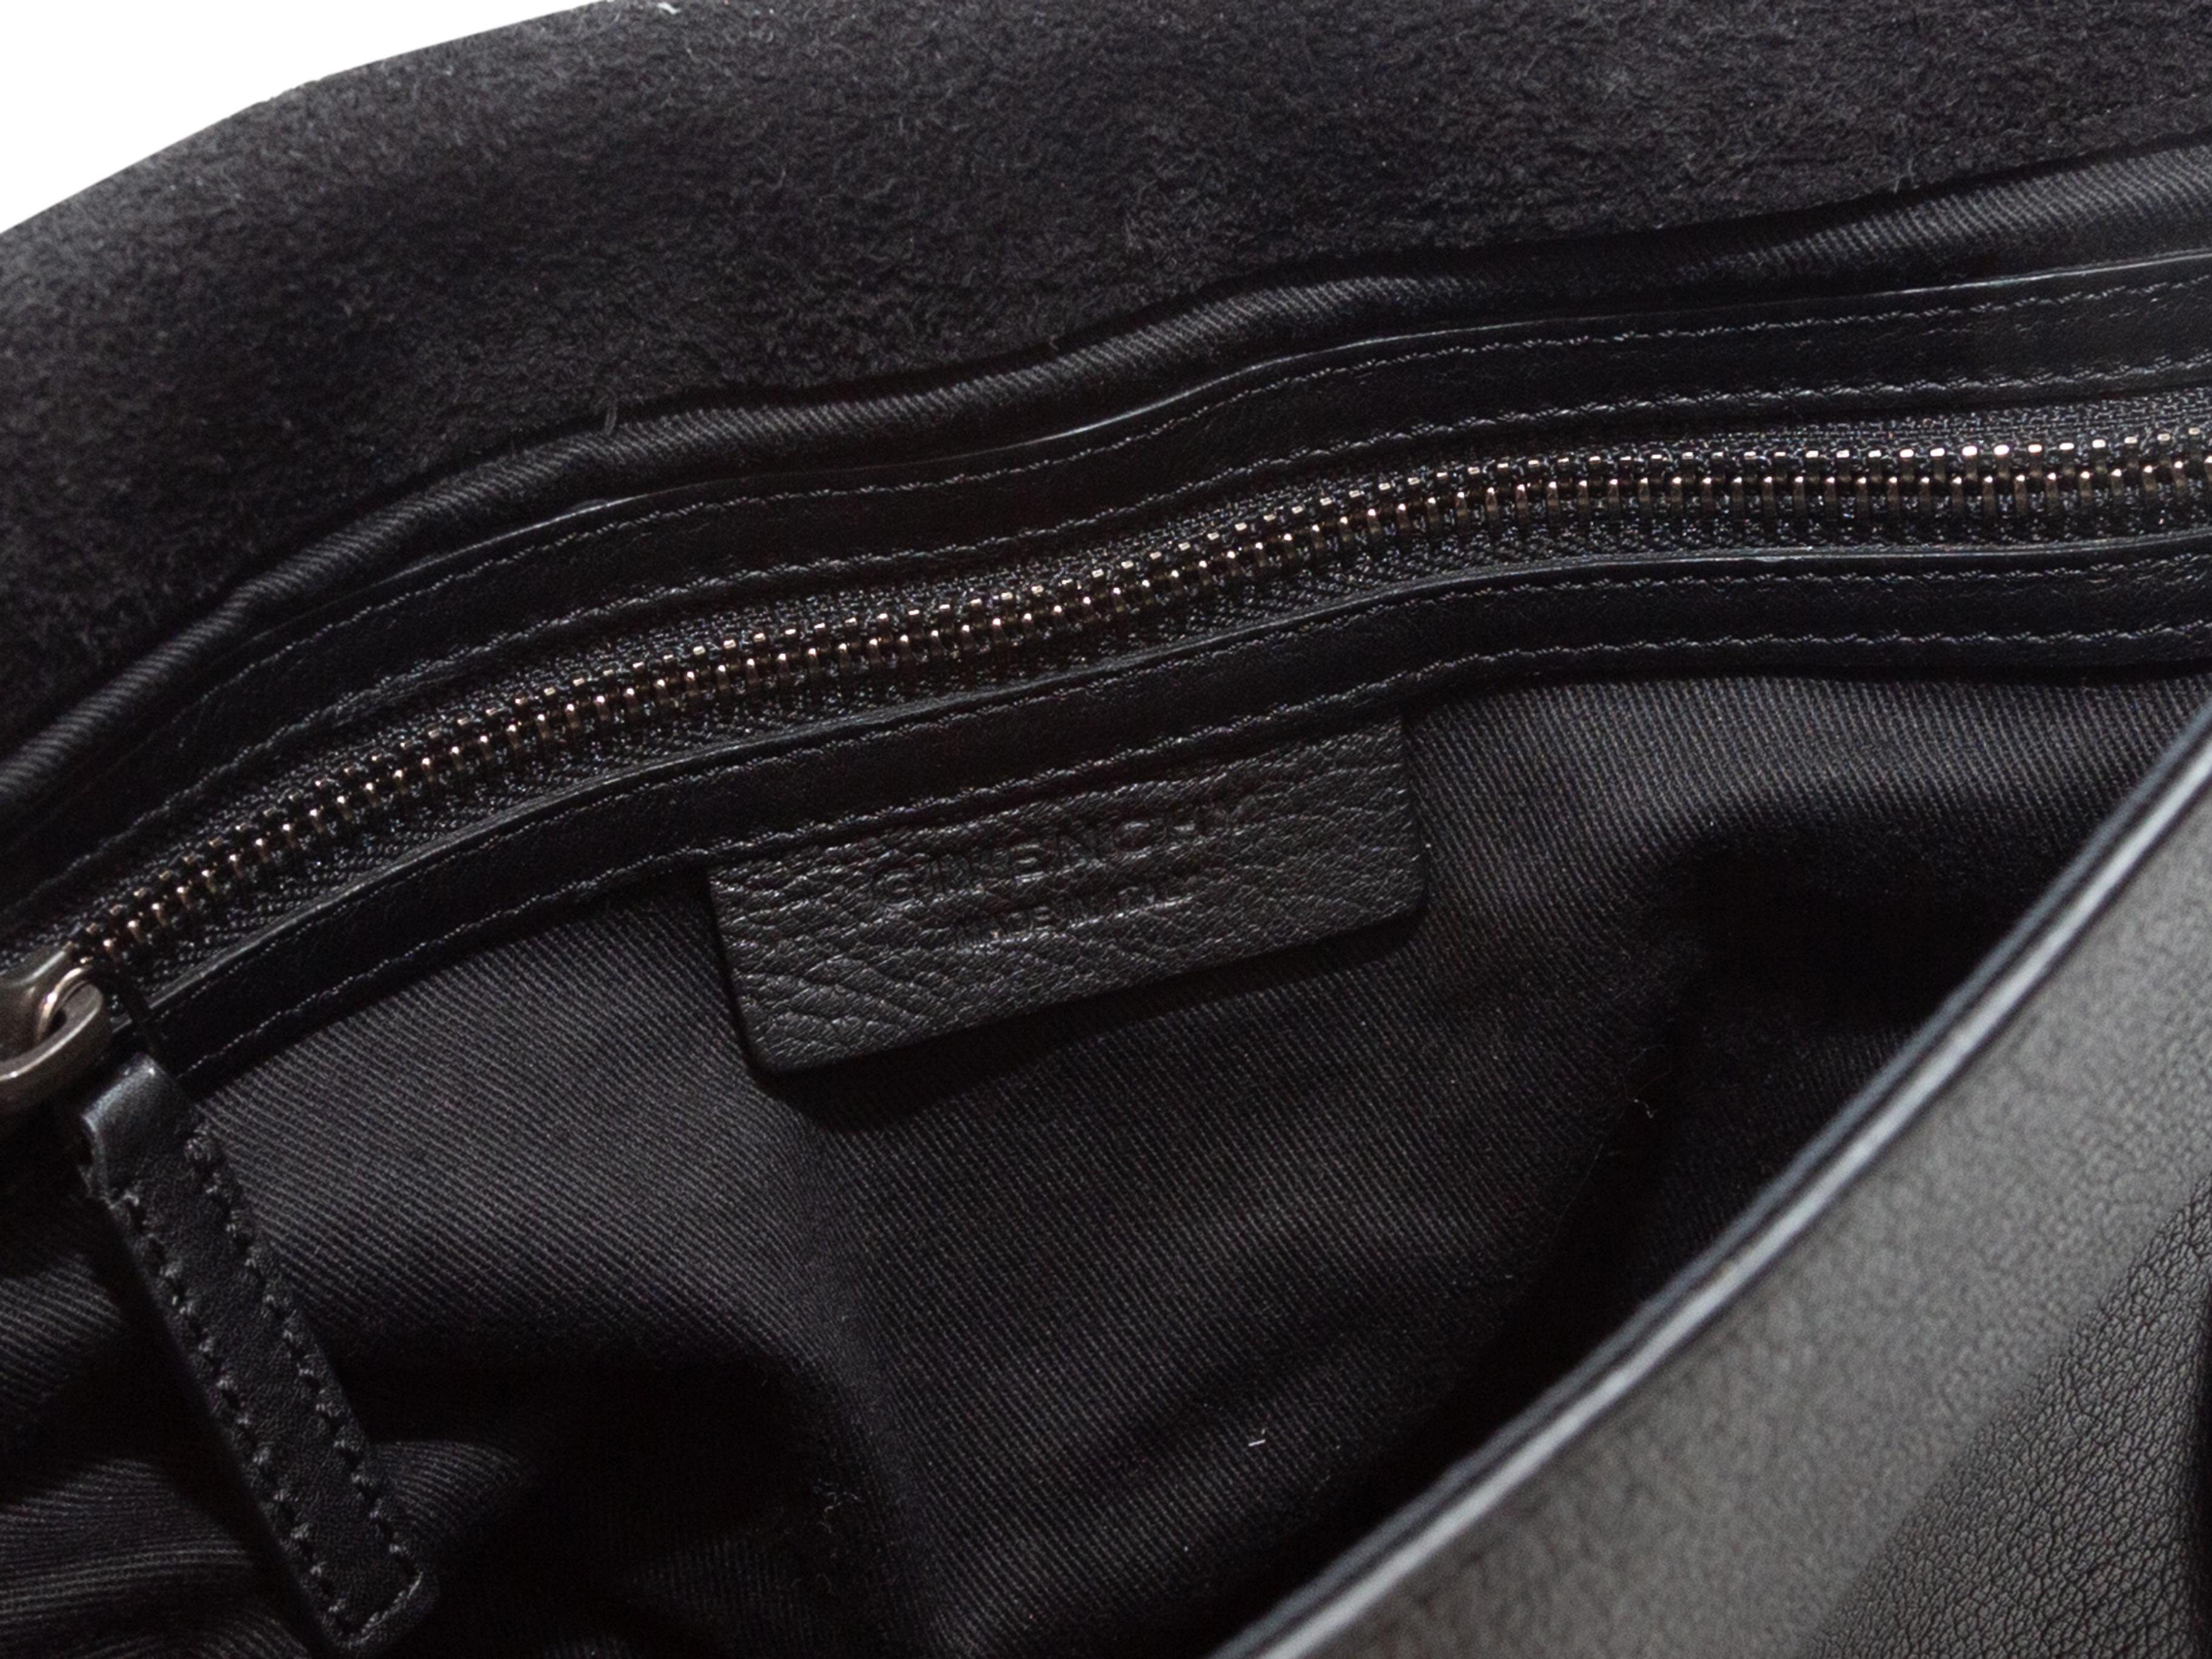 Product details: Black soft leather Obsedia crossbody bag by Givenchy. Interior zip pocket. Silver-tone hardware. Adjustable shoulder strap. Magnetic closure pocket at exterior back. Flap closure at front. 12.5